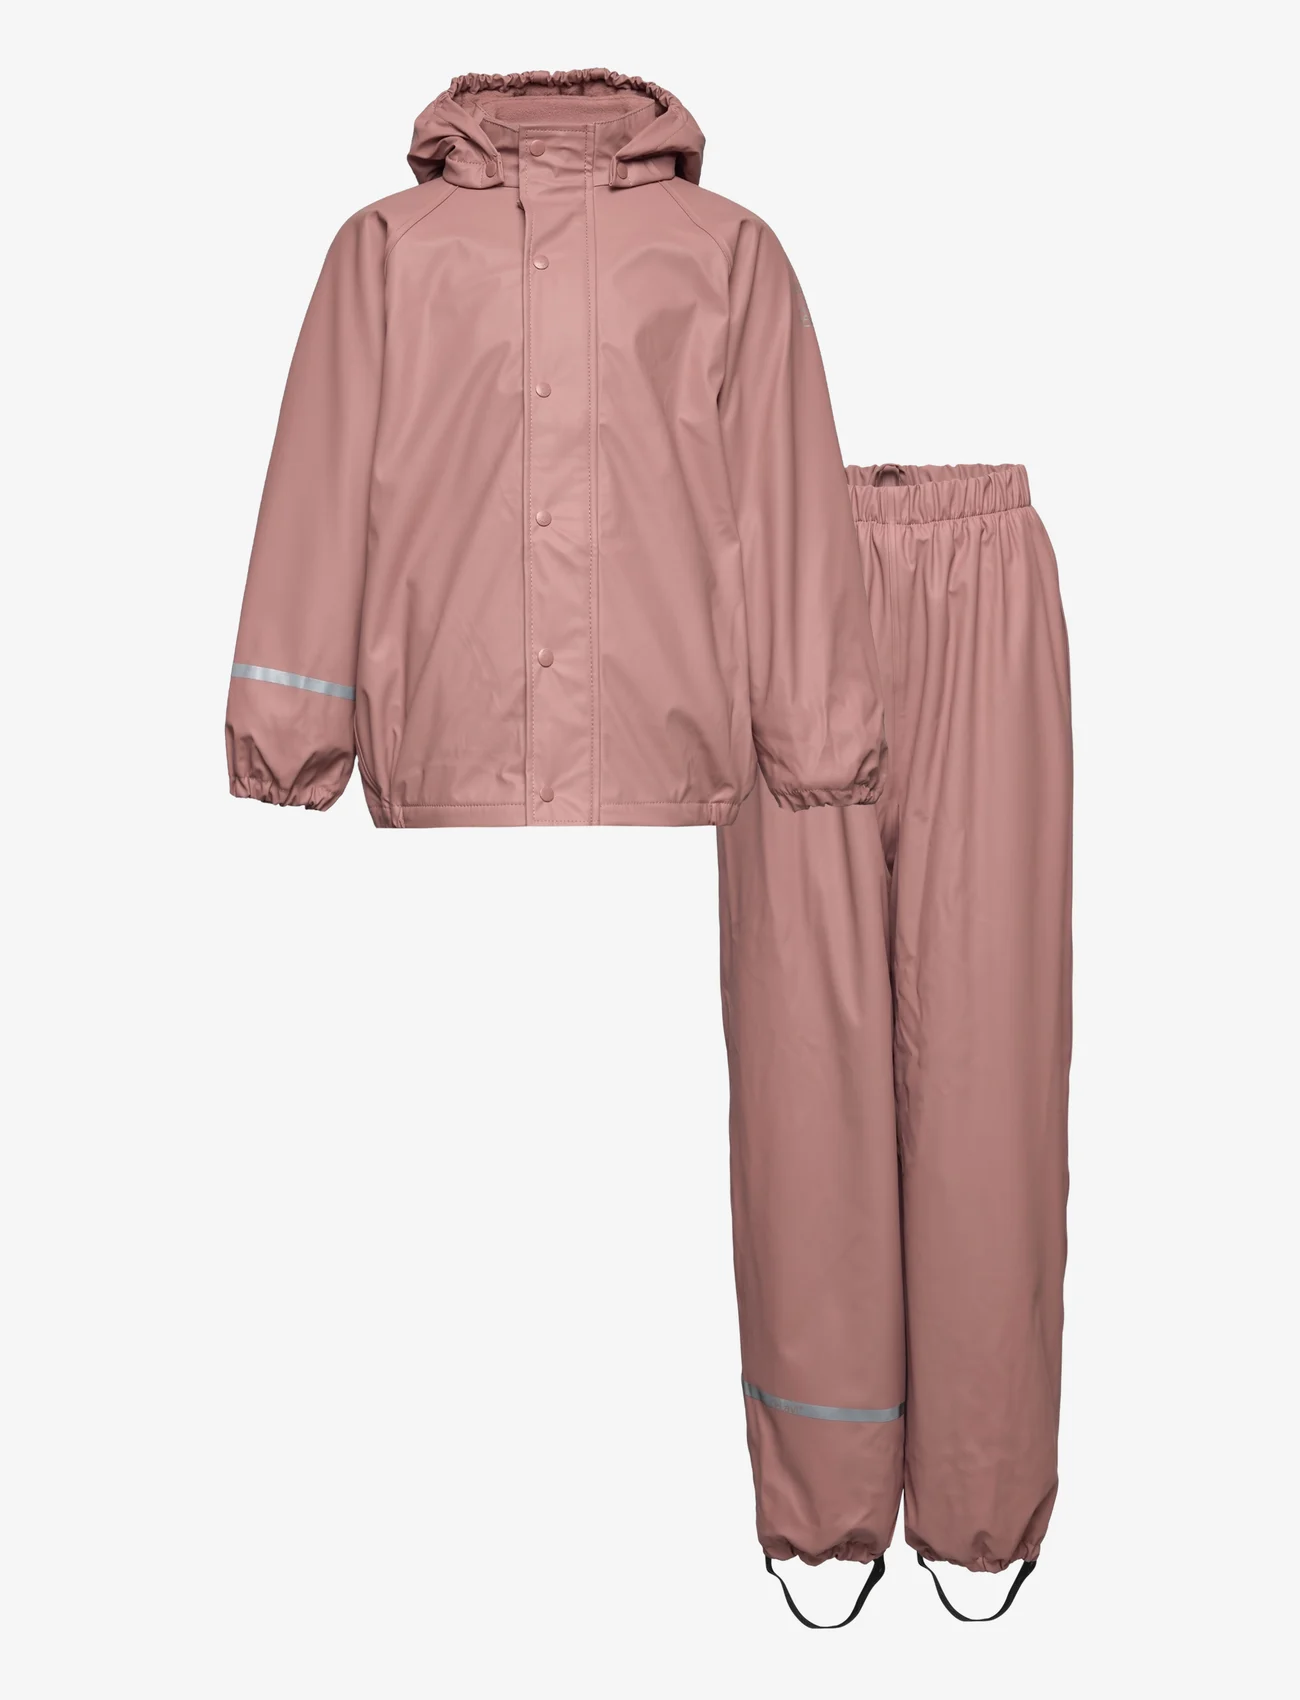 CeLaVi - Rainwear Set -Solid, w.fleece - vinterdress - burlwood - 0